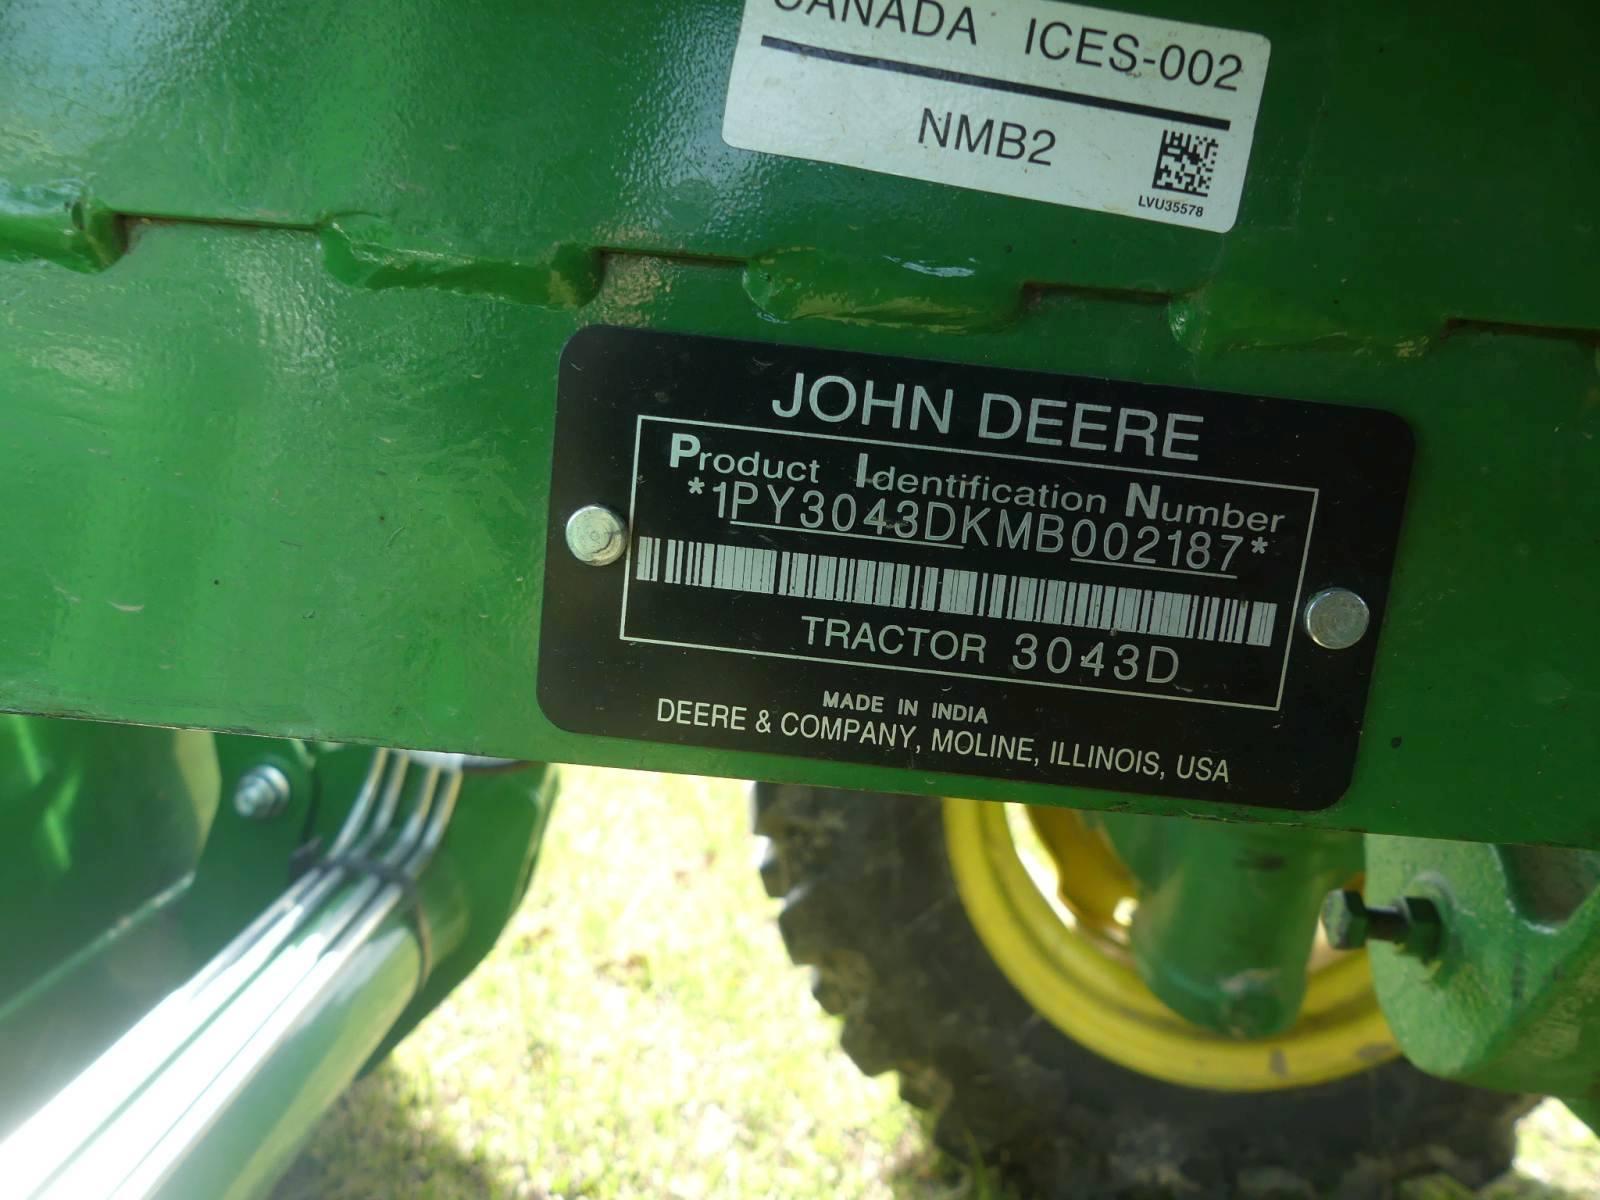 2022 John Deere 3043D MFWD Tractor, s/n 1PY3043DKMB002187: Remaining Factor